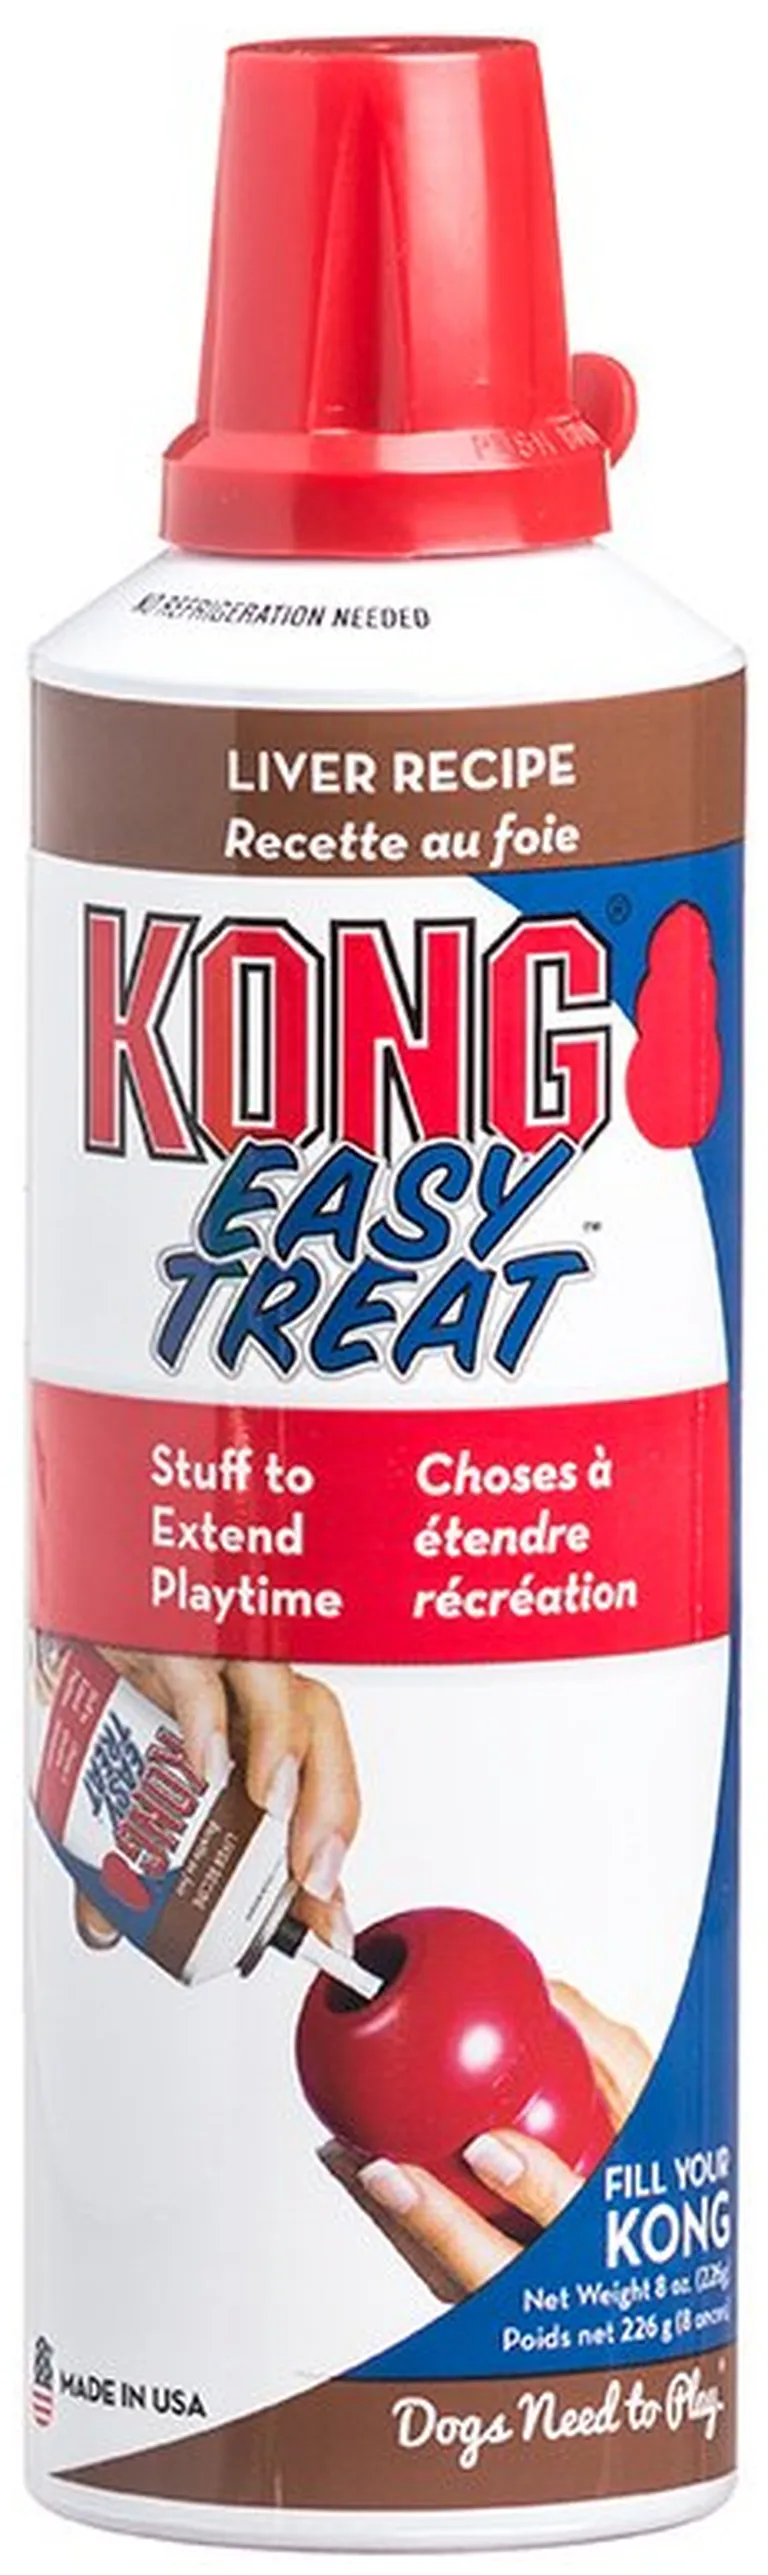 Kong Stuff'n Easy Treat - Liver Recipe Photo 1